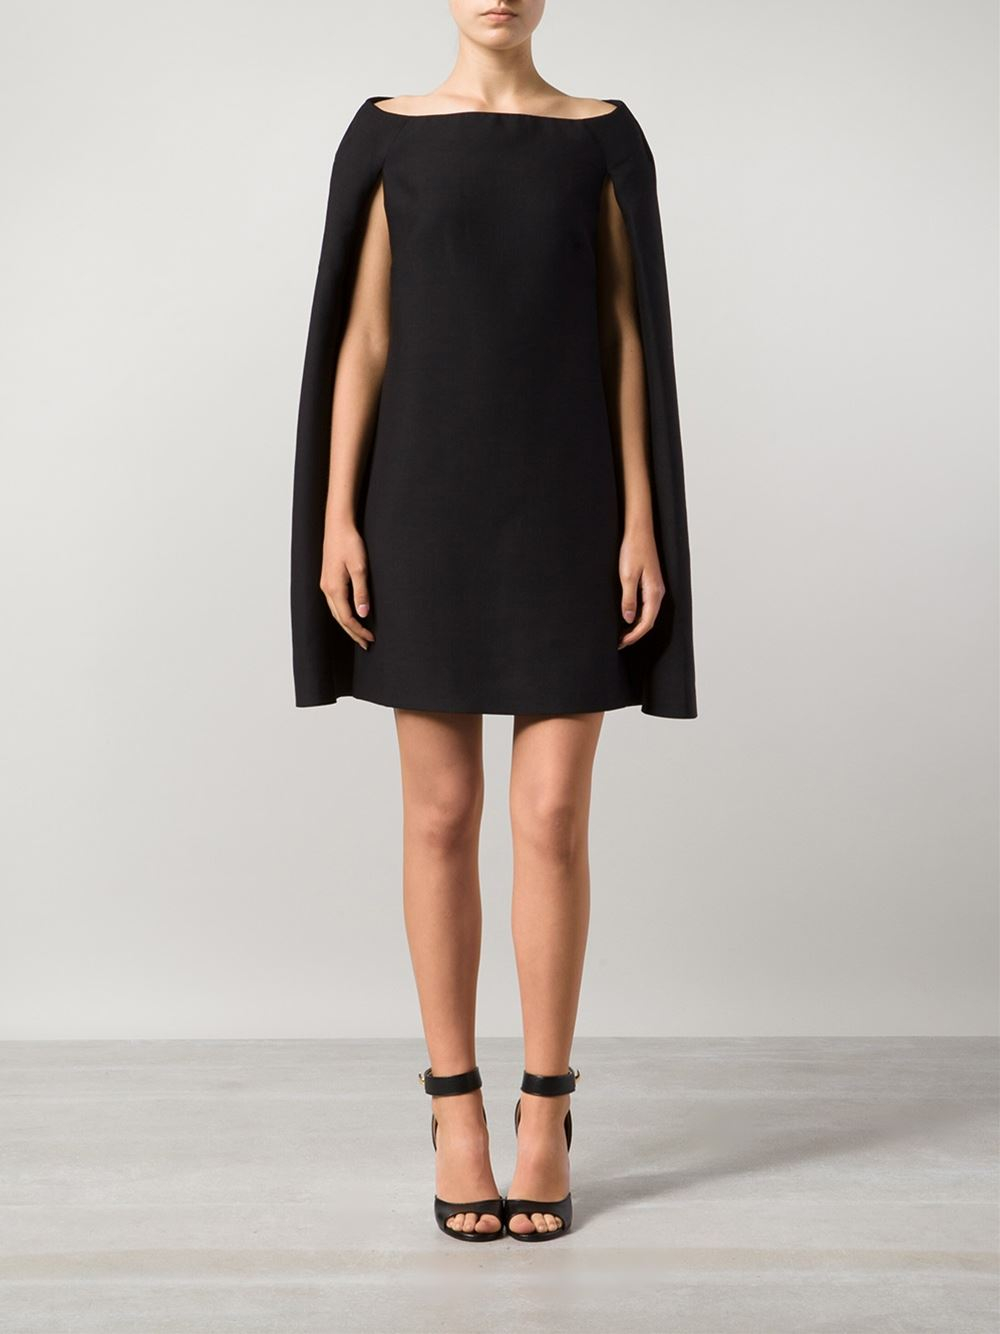 Valentino Cape Dress in Black | Lyst